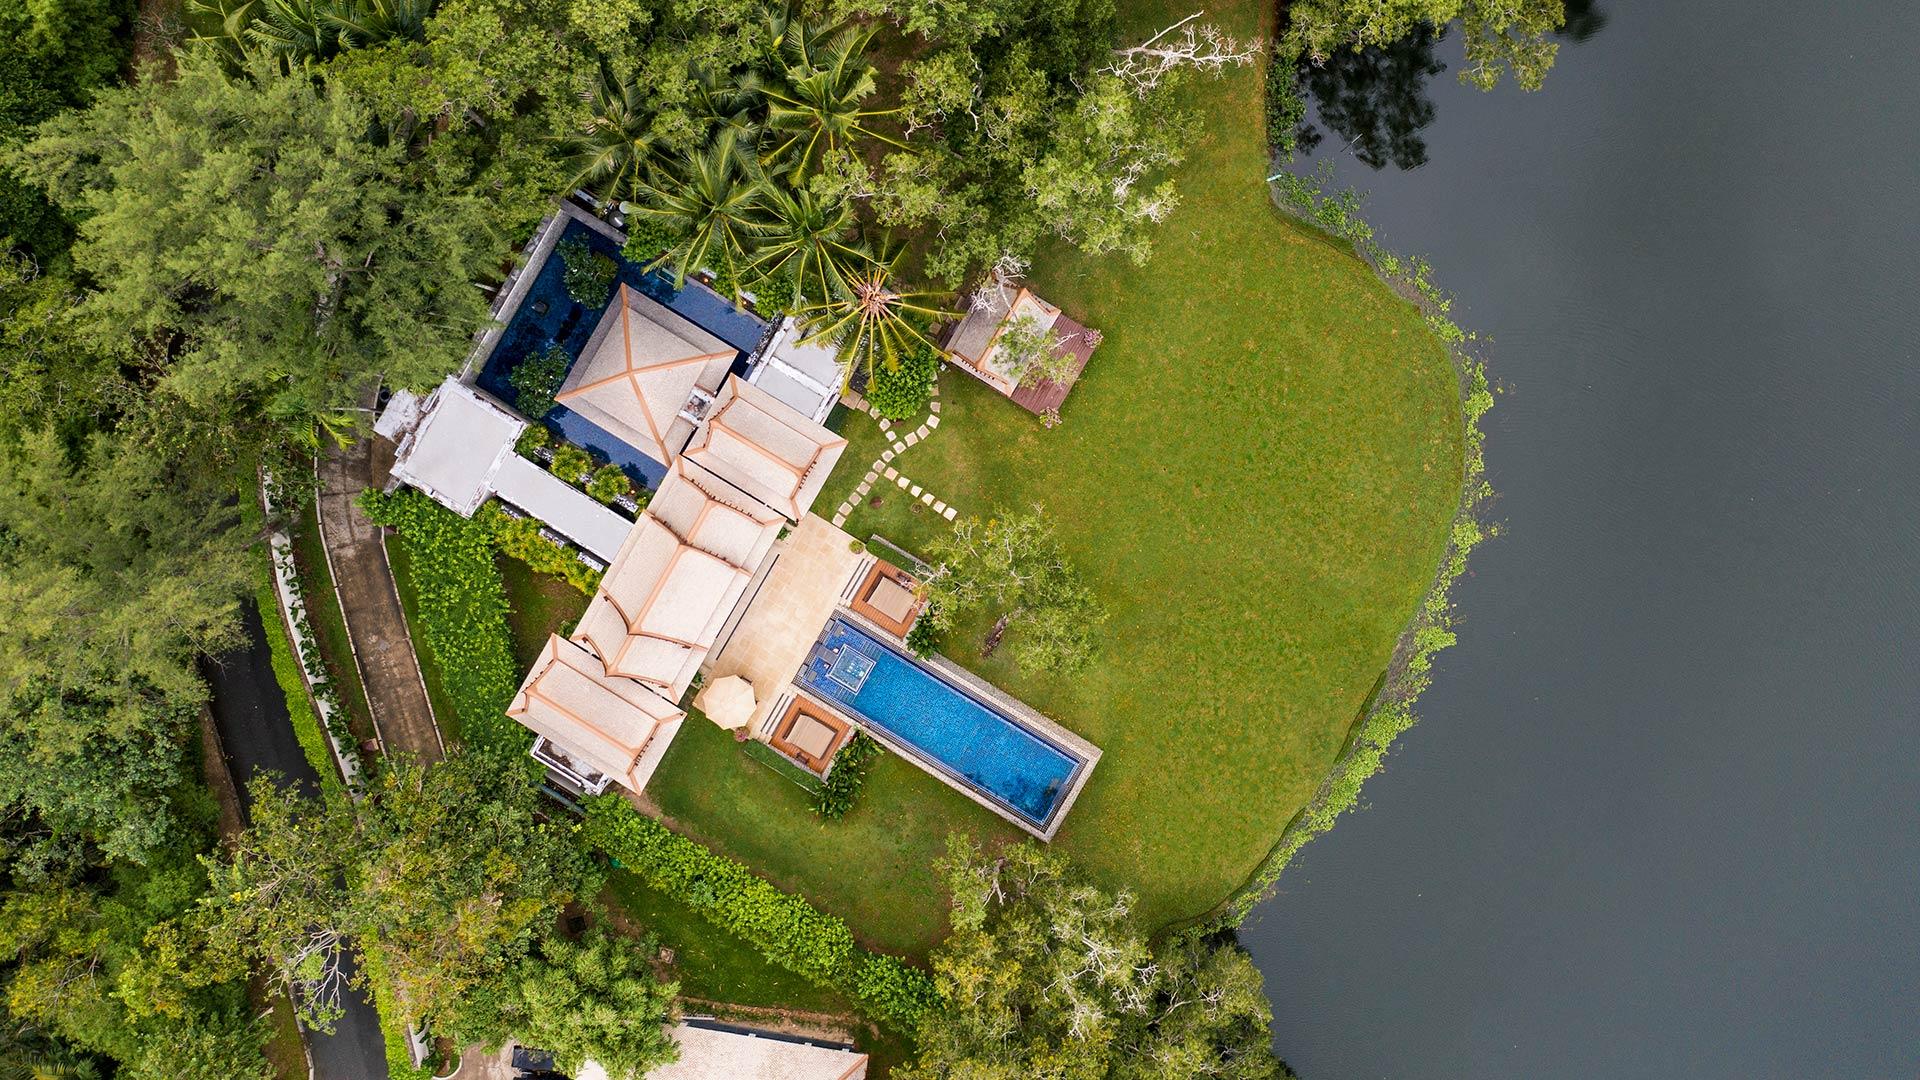 doublepool villas phuket offers